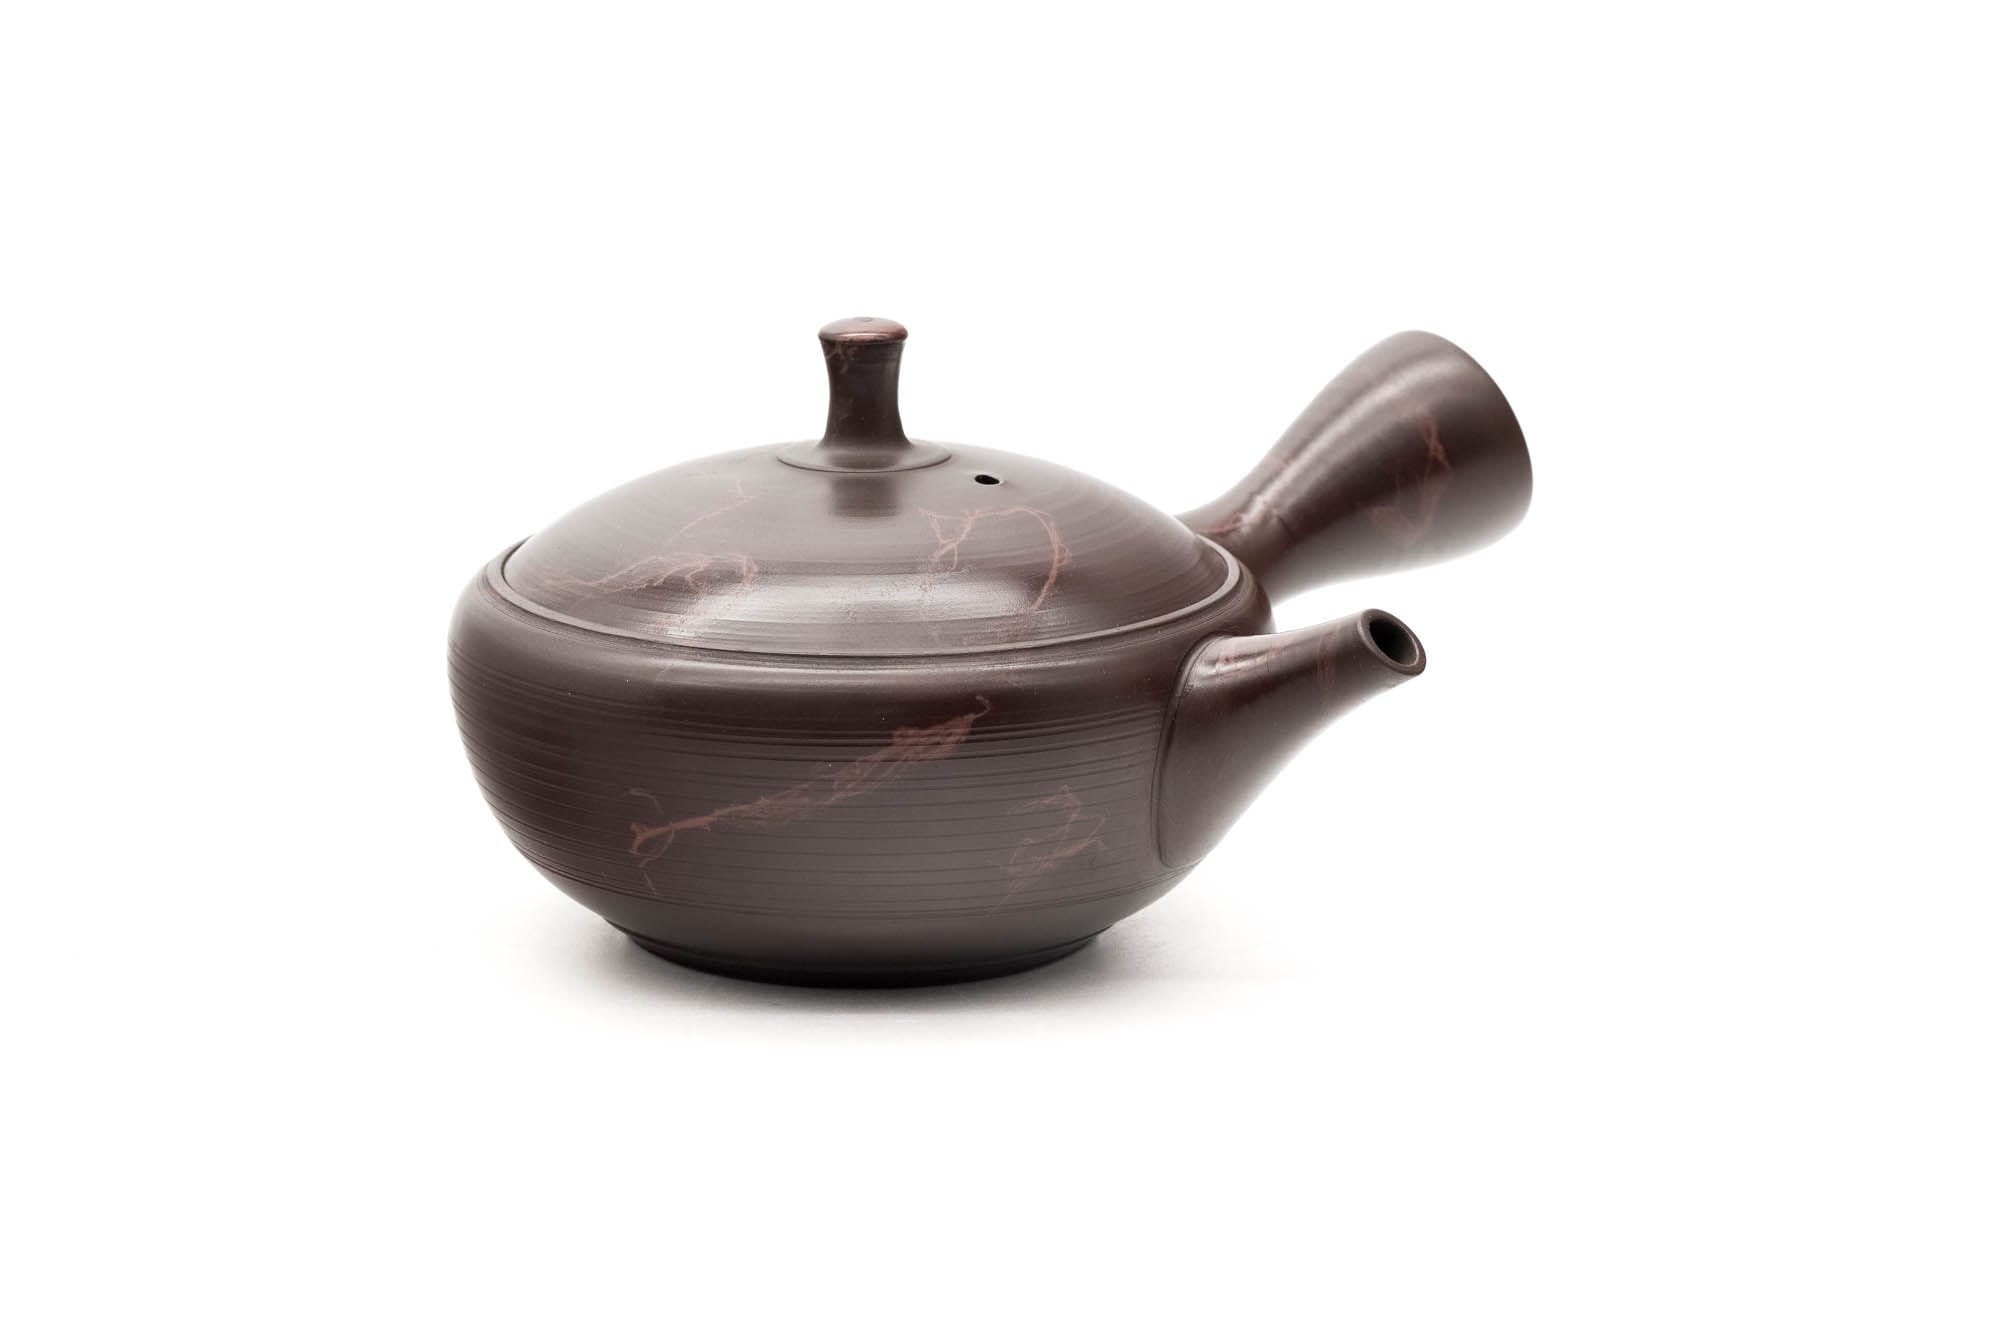 Japanese Stainless Steel Teapot Handmade Kyusu Made in Japan 0.7L